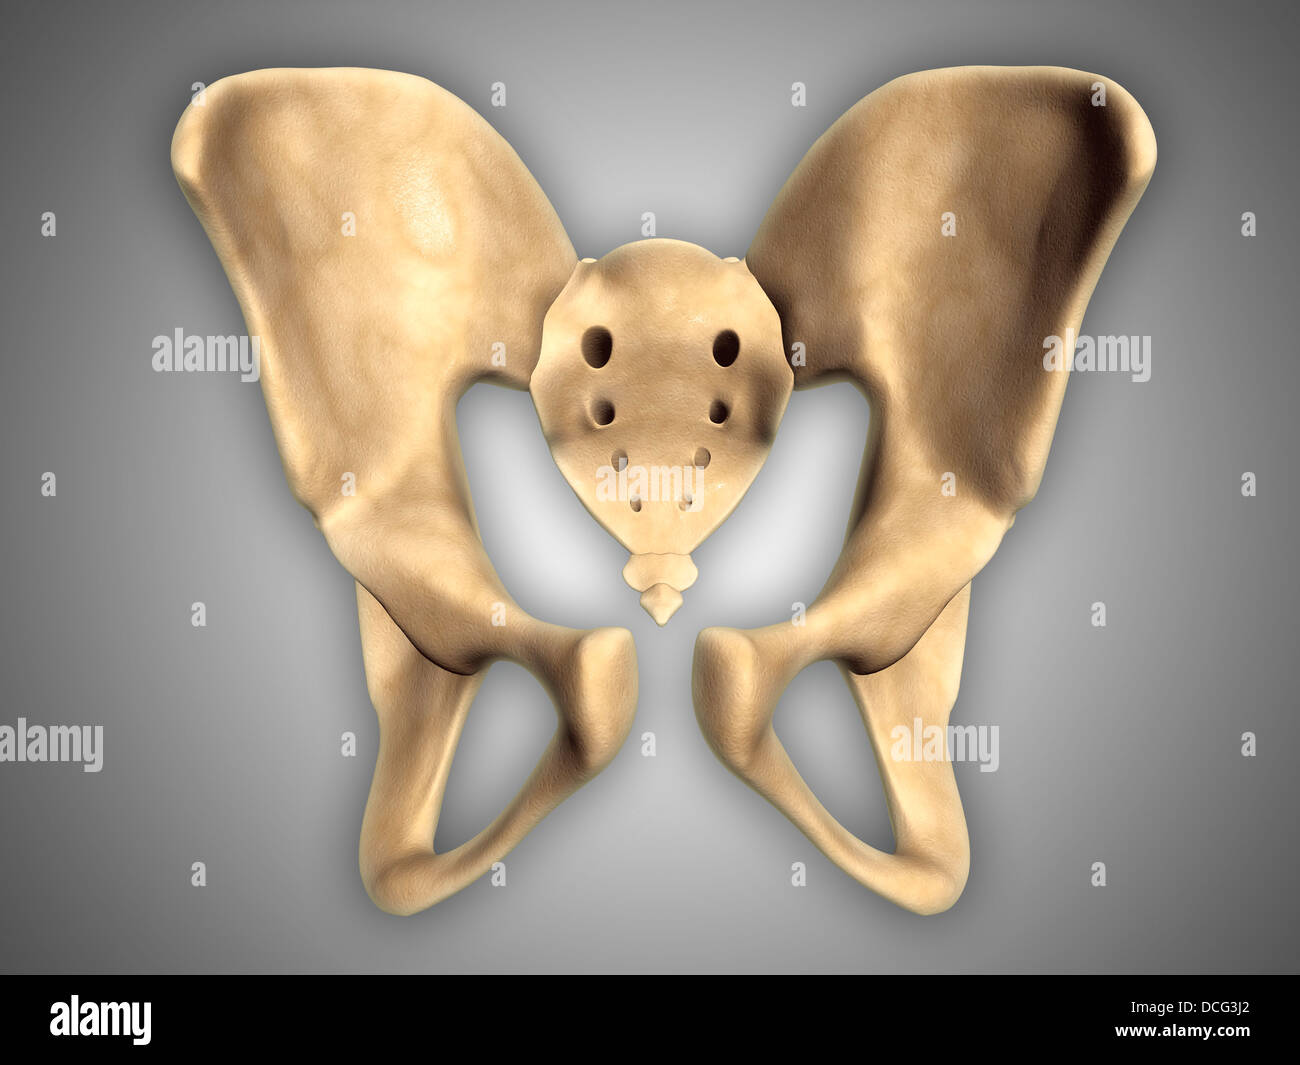 Anatomy of human pelvic bone. Stock Photo